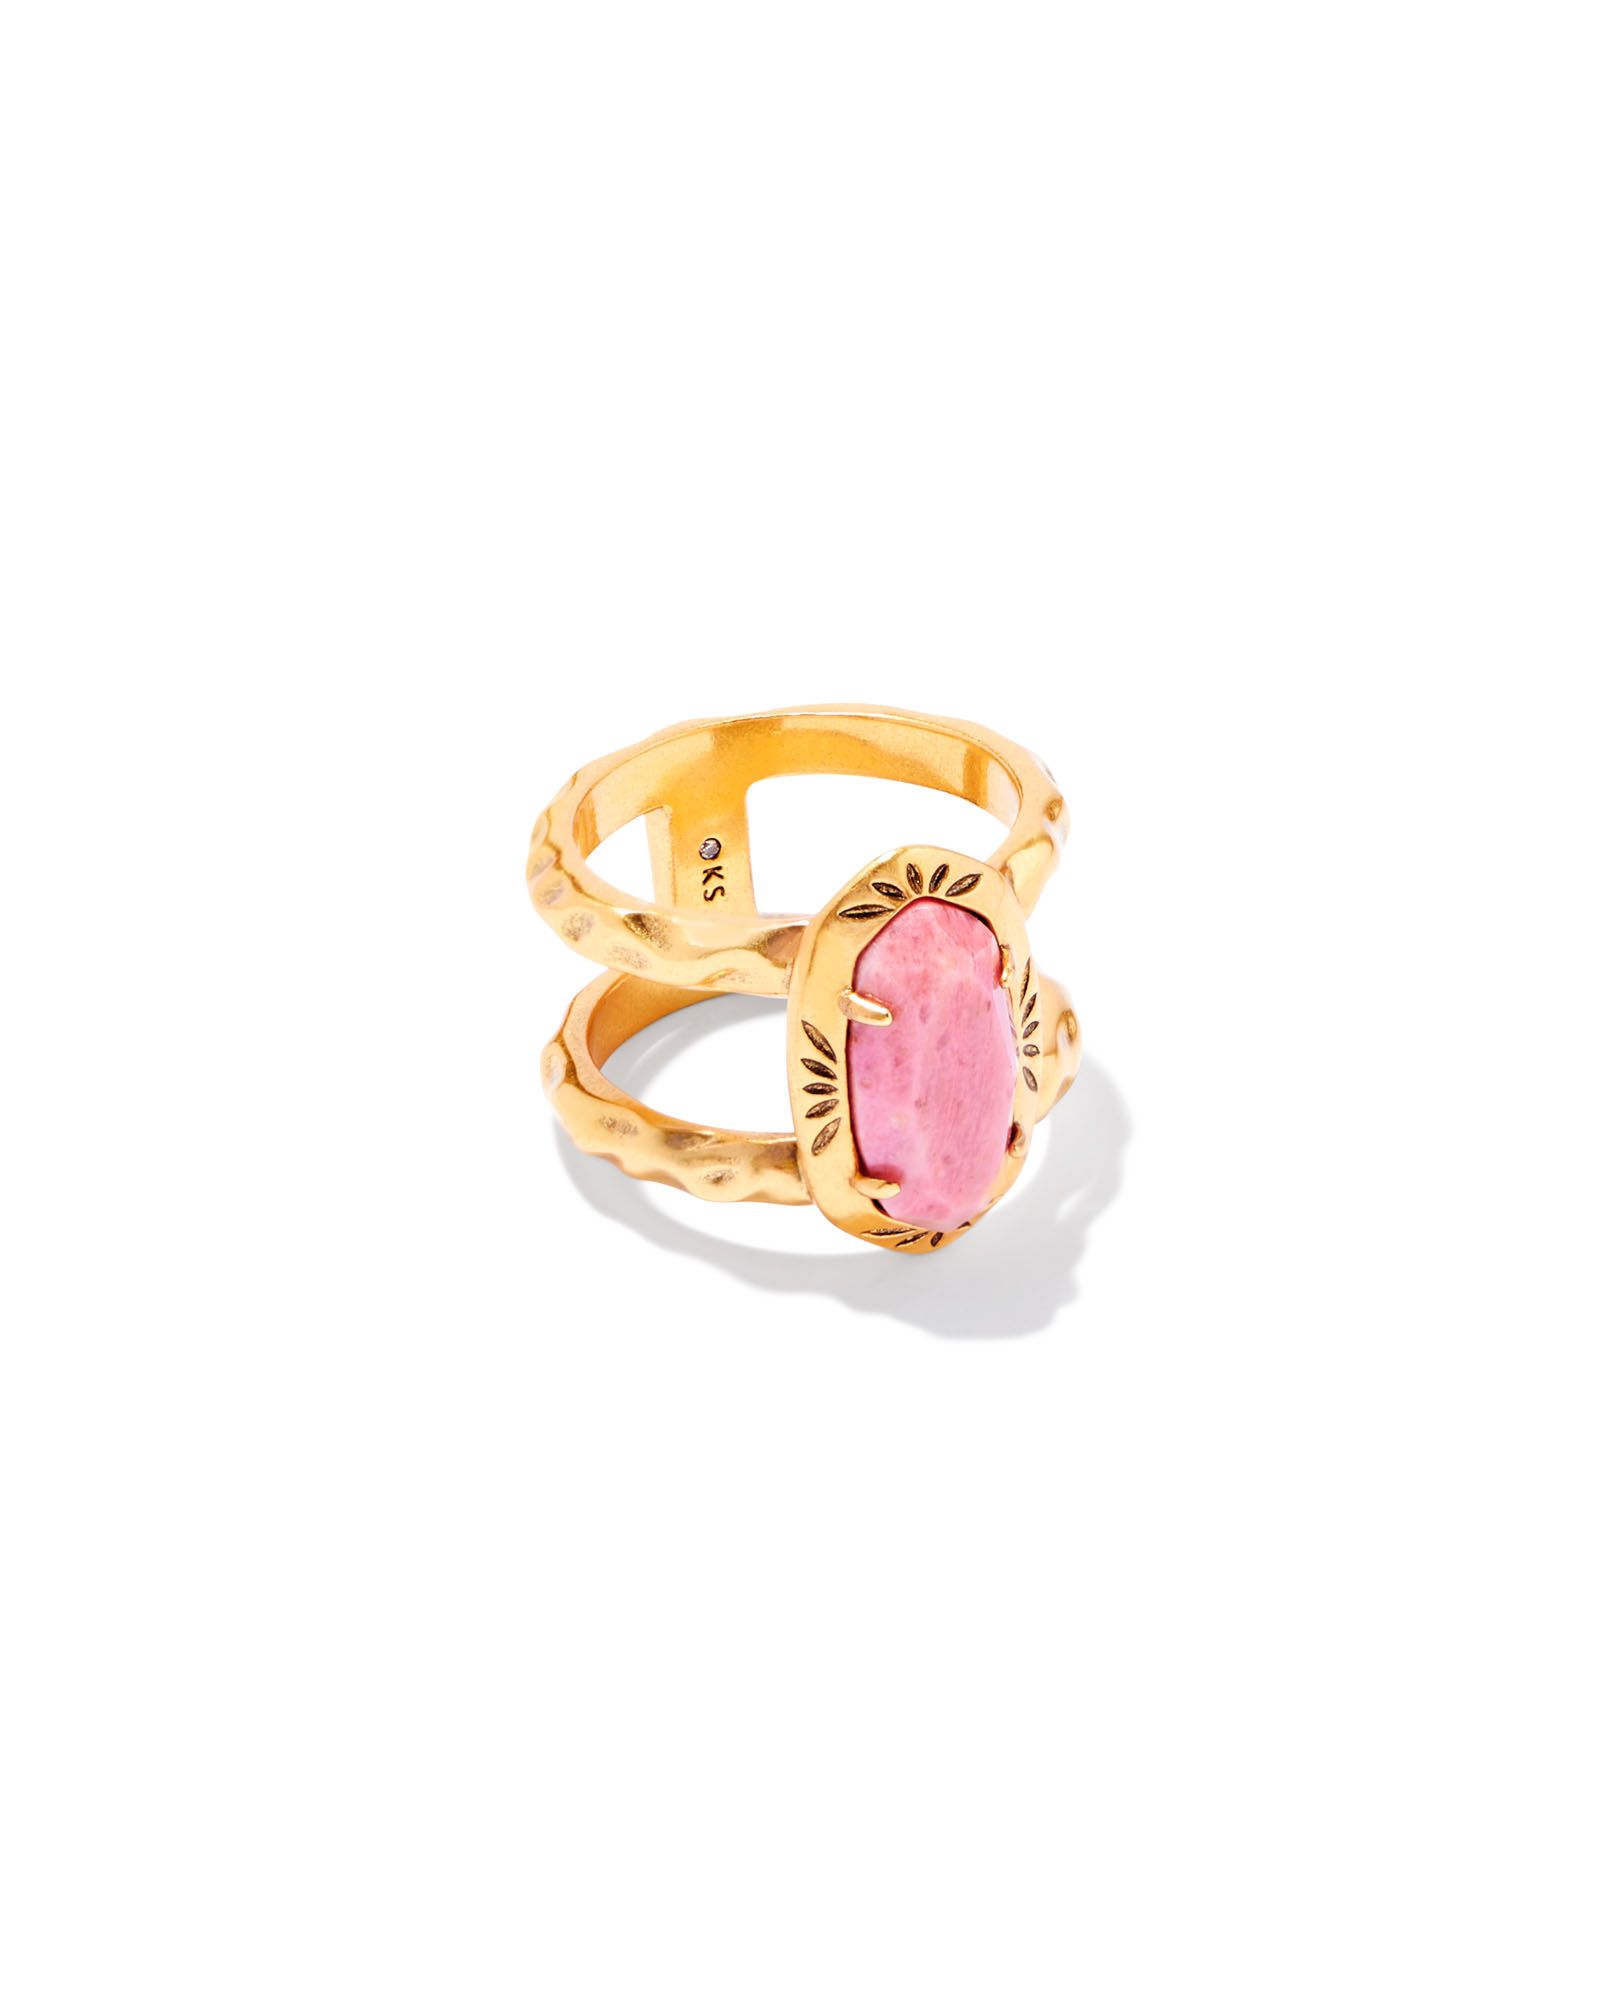 Elyse Vintage Gold Etch Frame Band Ring in Blush Pink Quartzite | Kendra Scott